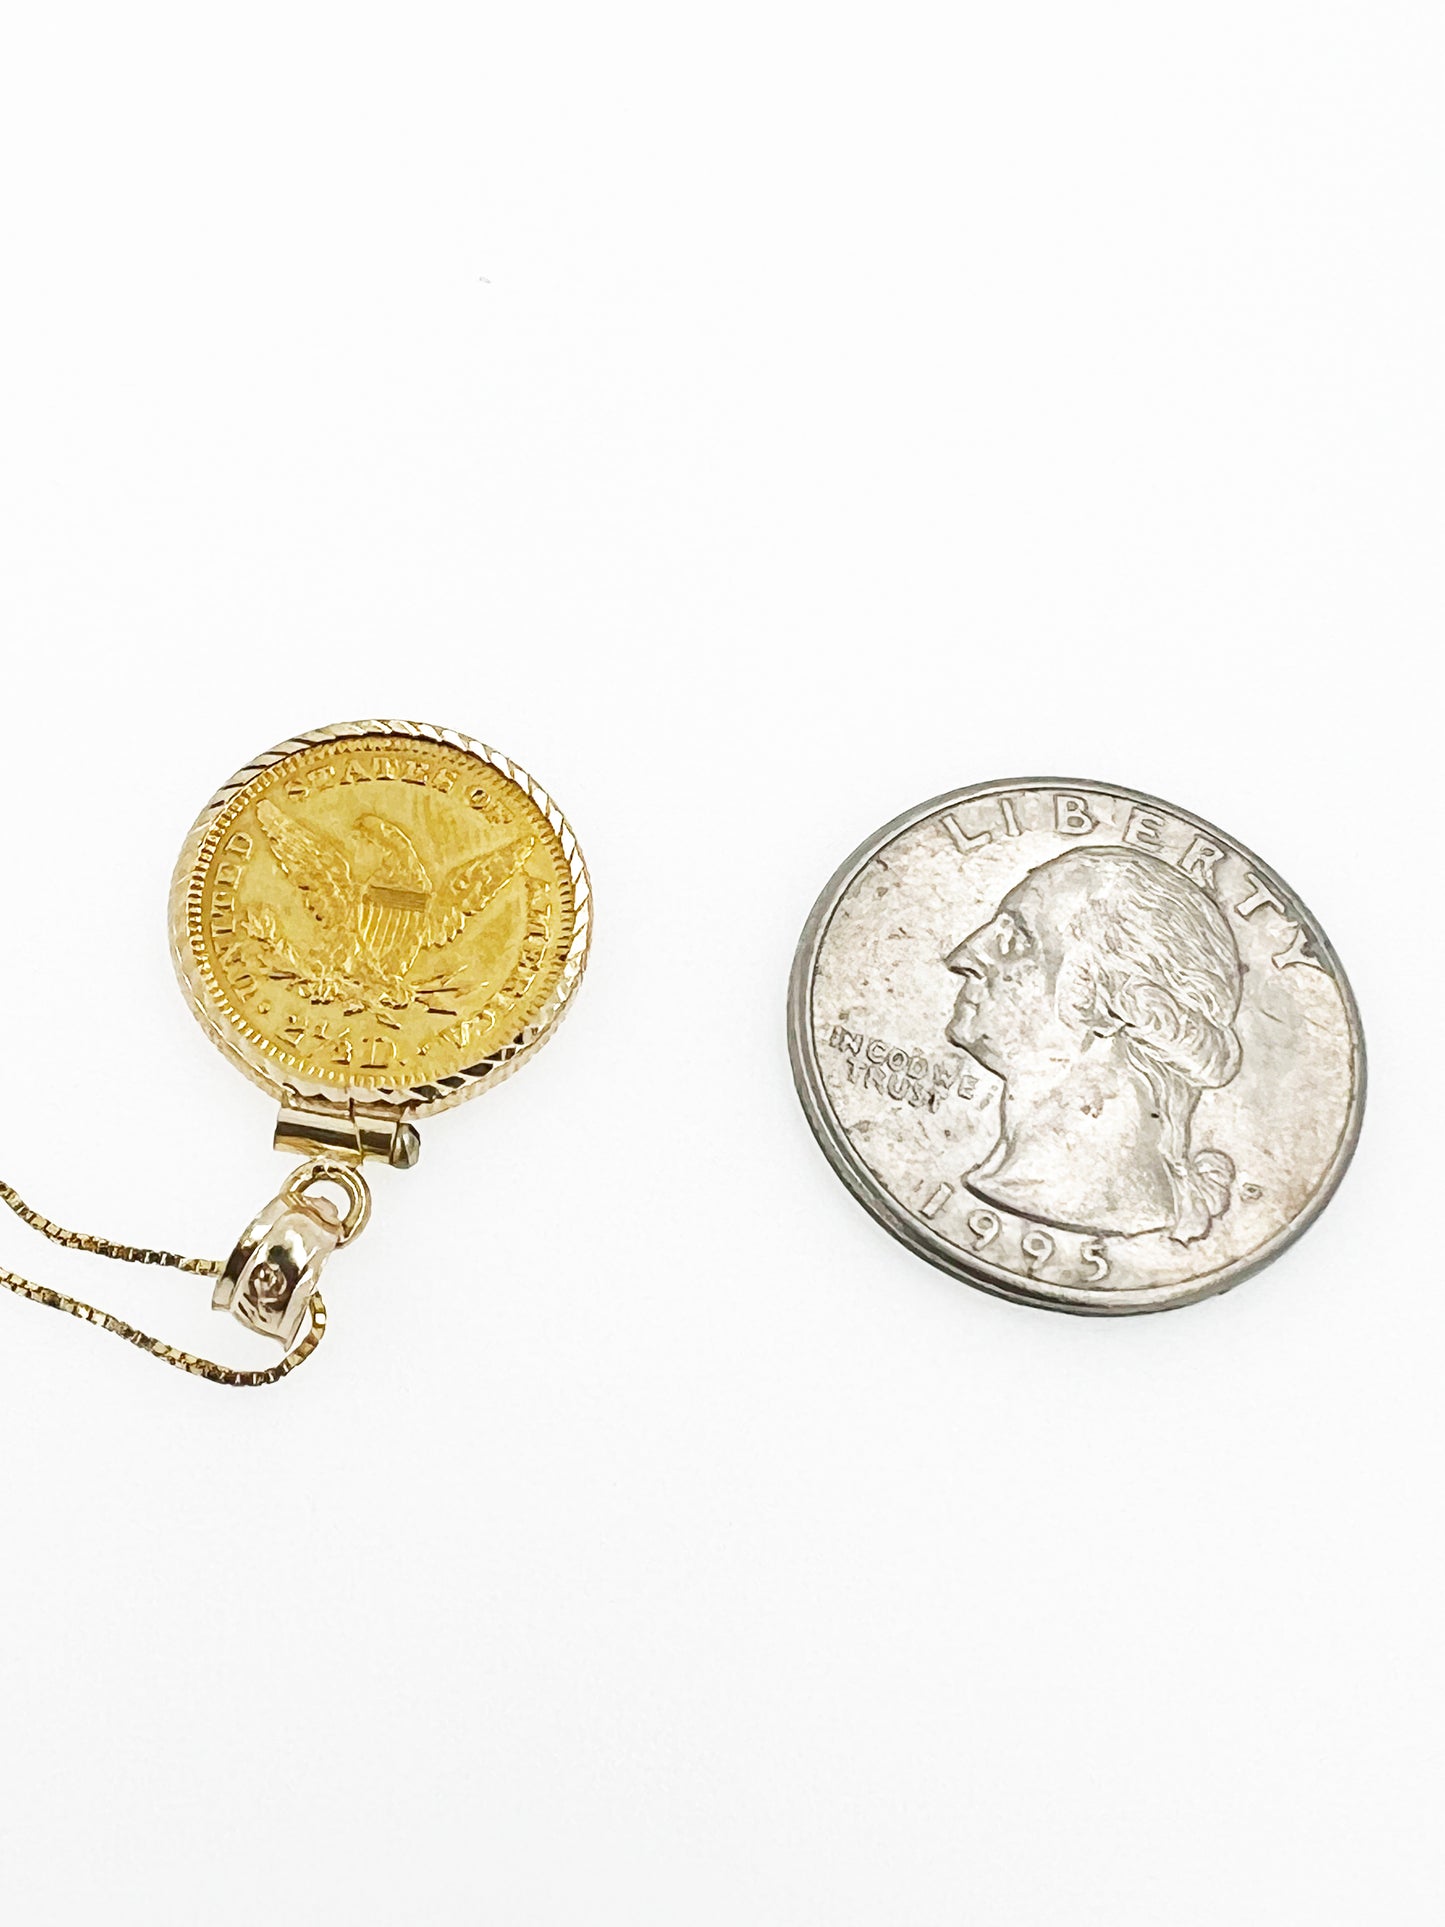 1905 $2.5 Liberty Quarter Pendant (21.6k) in 14k Yellow Gold Mounting